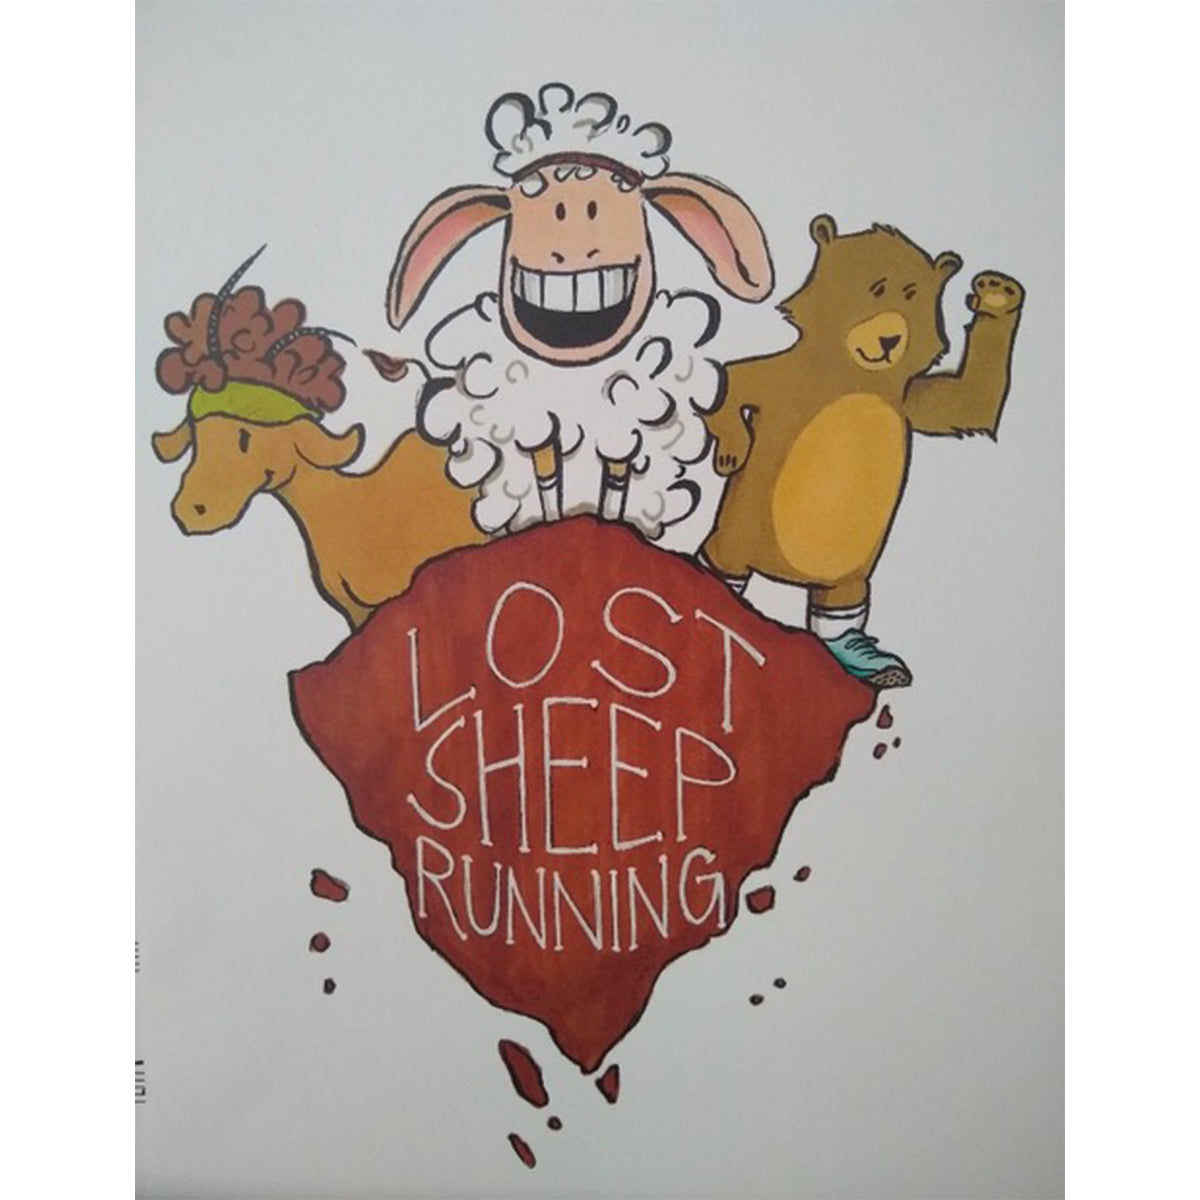 Lost Sheep Running